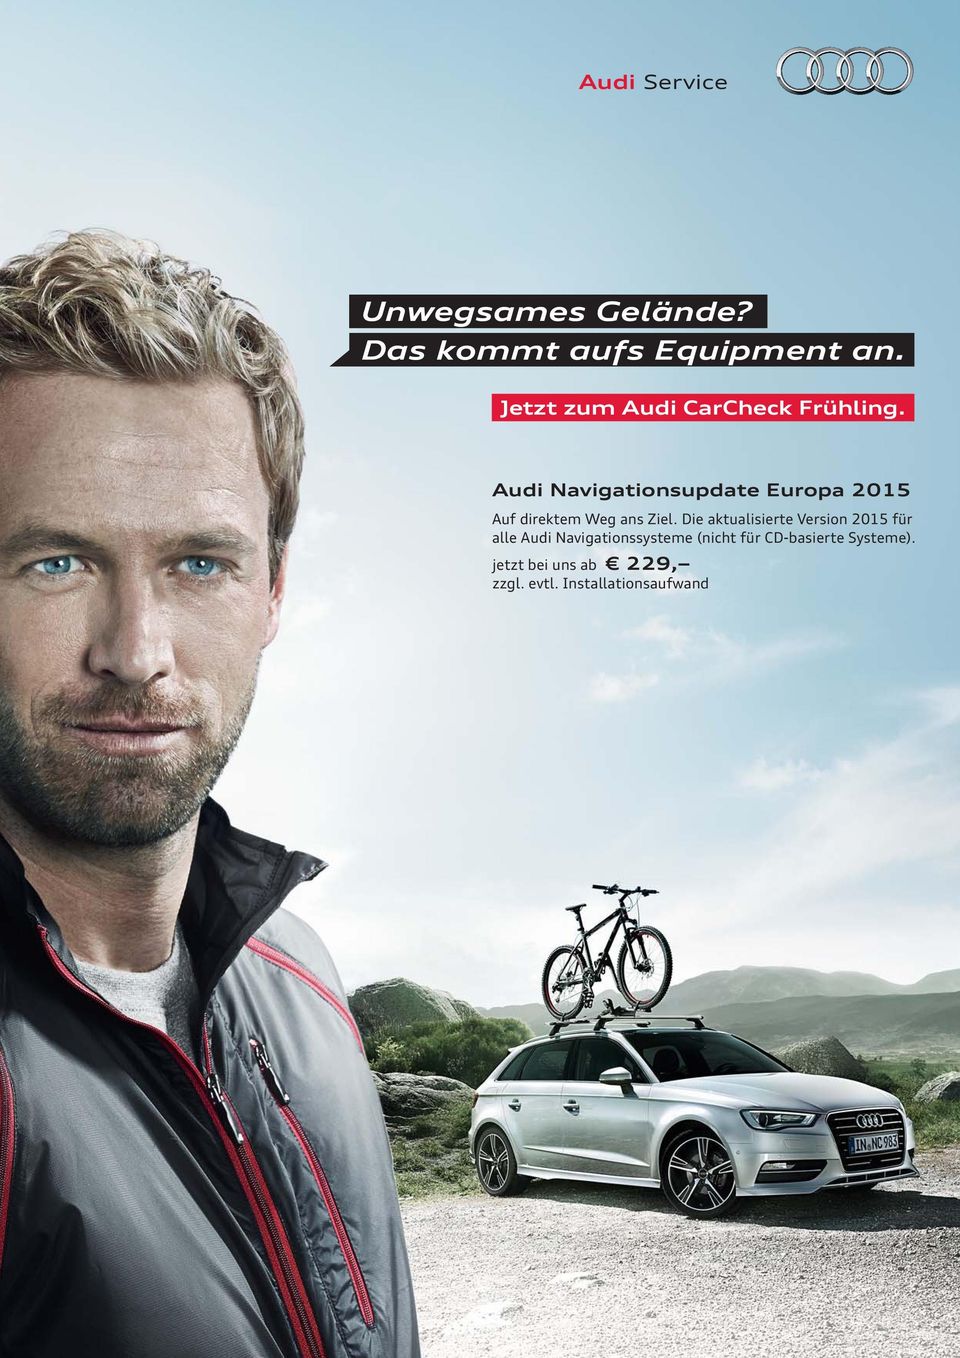 Audi Navigationsupdate Europa 2015 Auf direktem Weg ans Ziel.